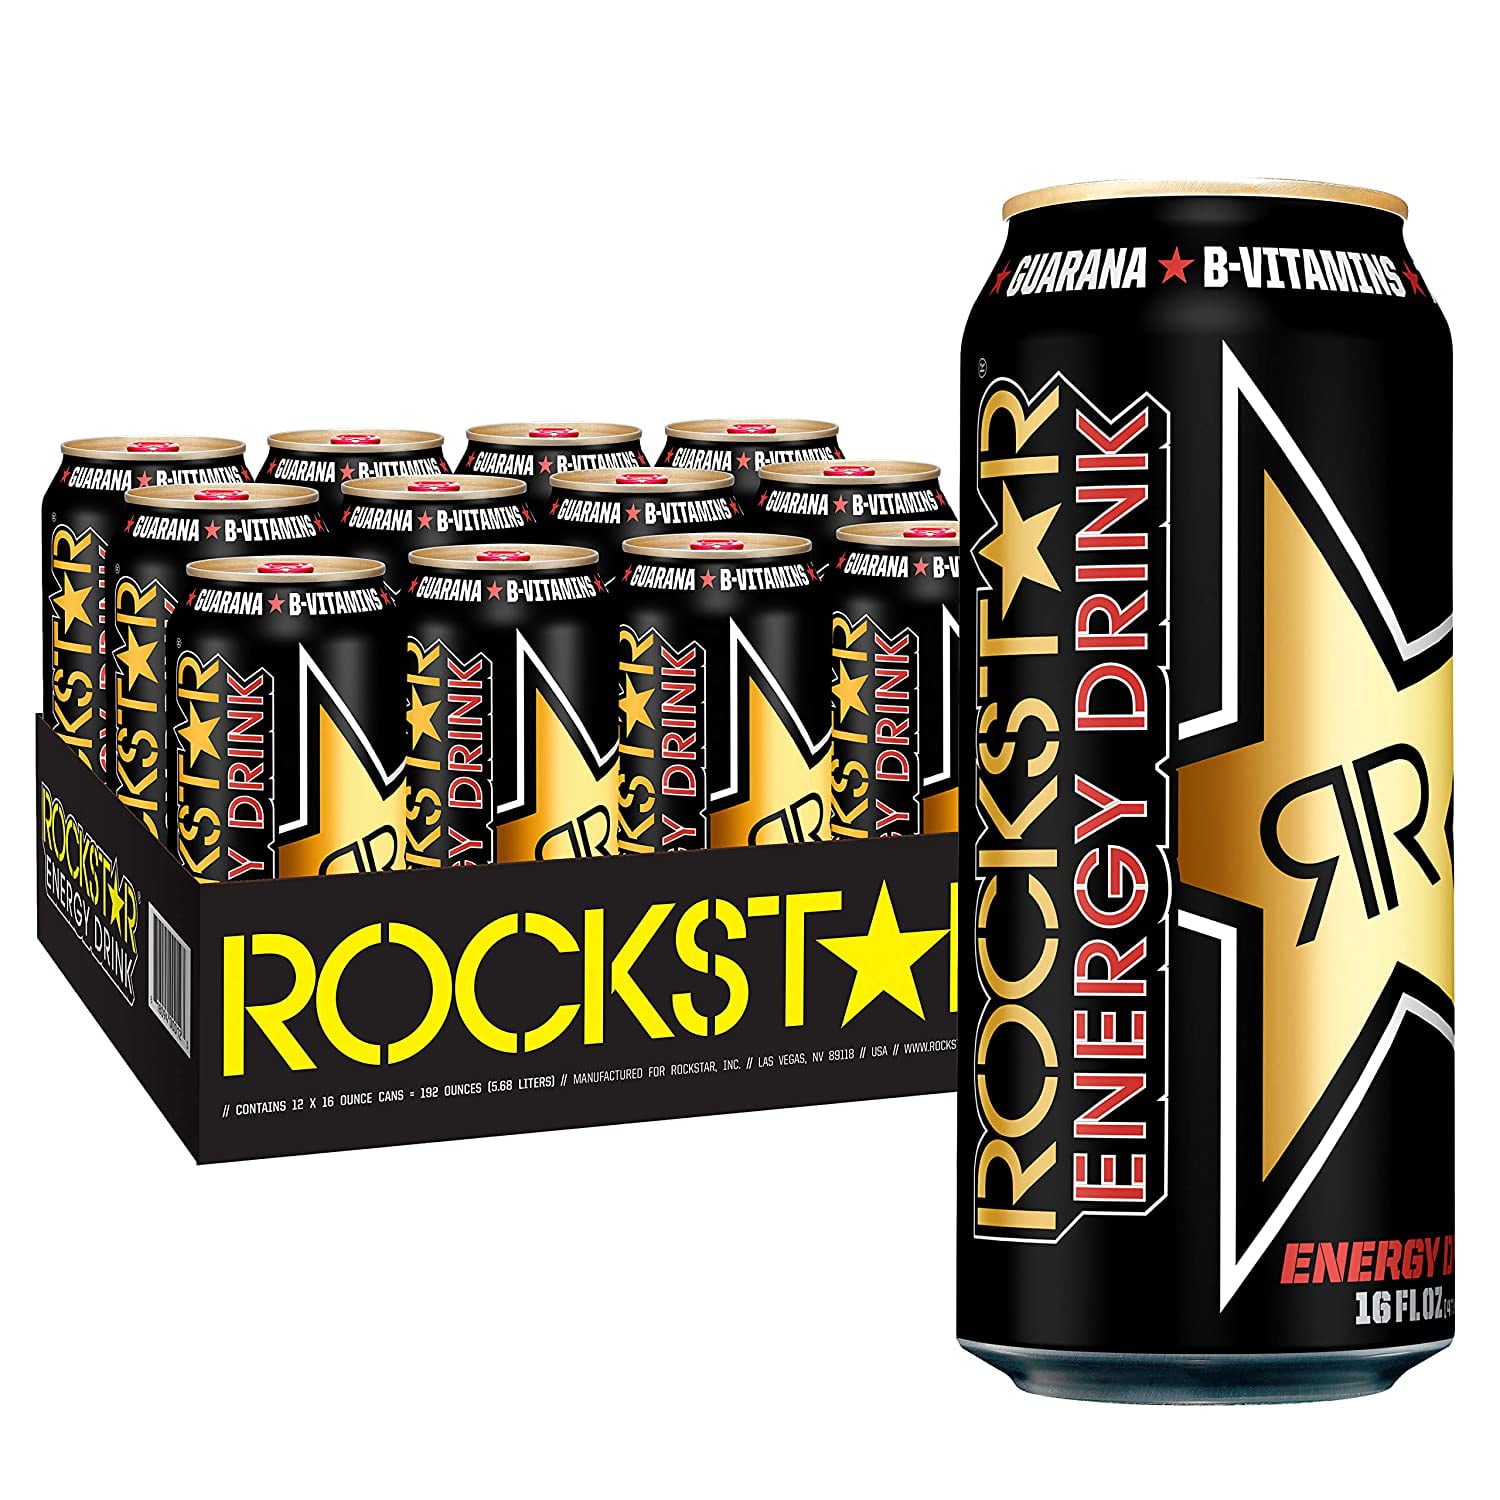 rockstar energy drink business plan